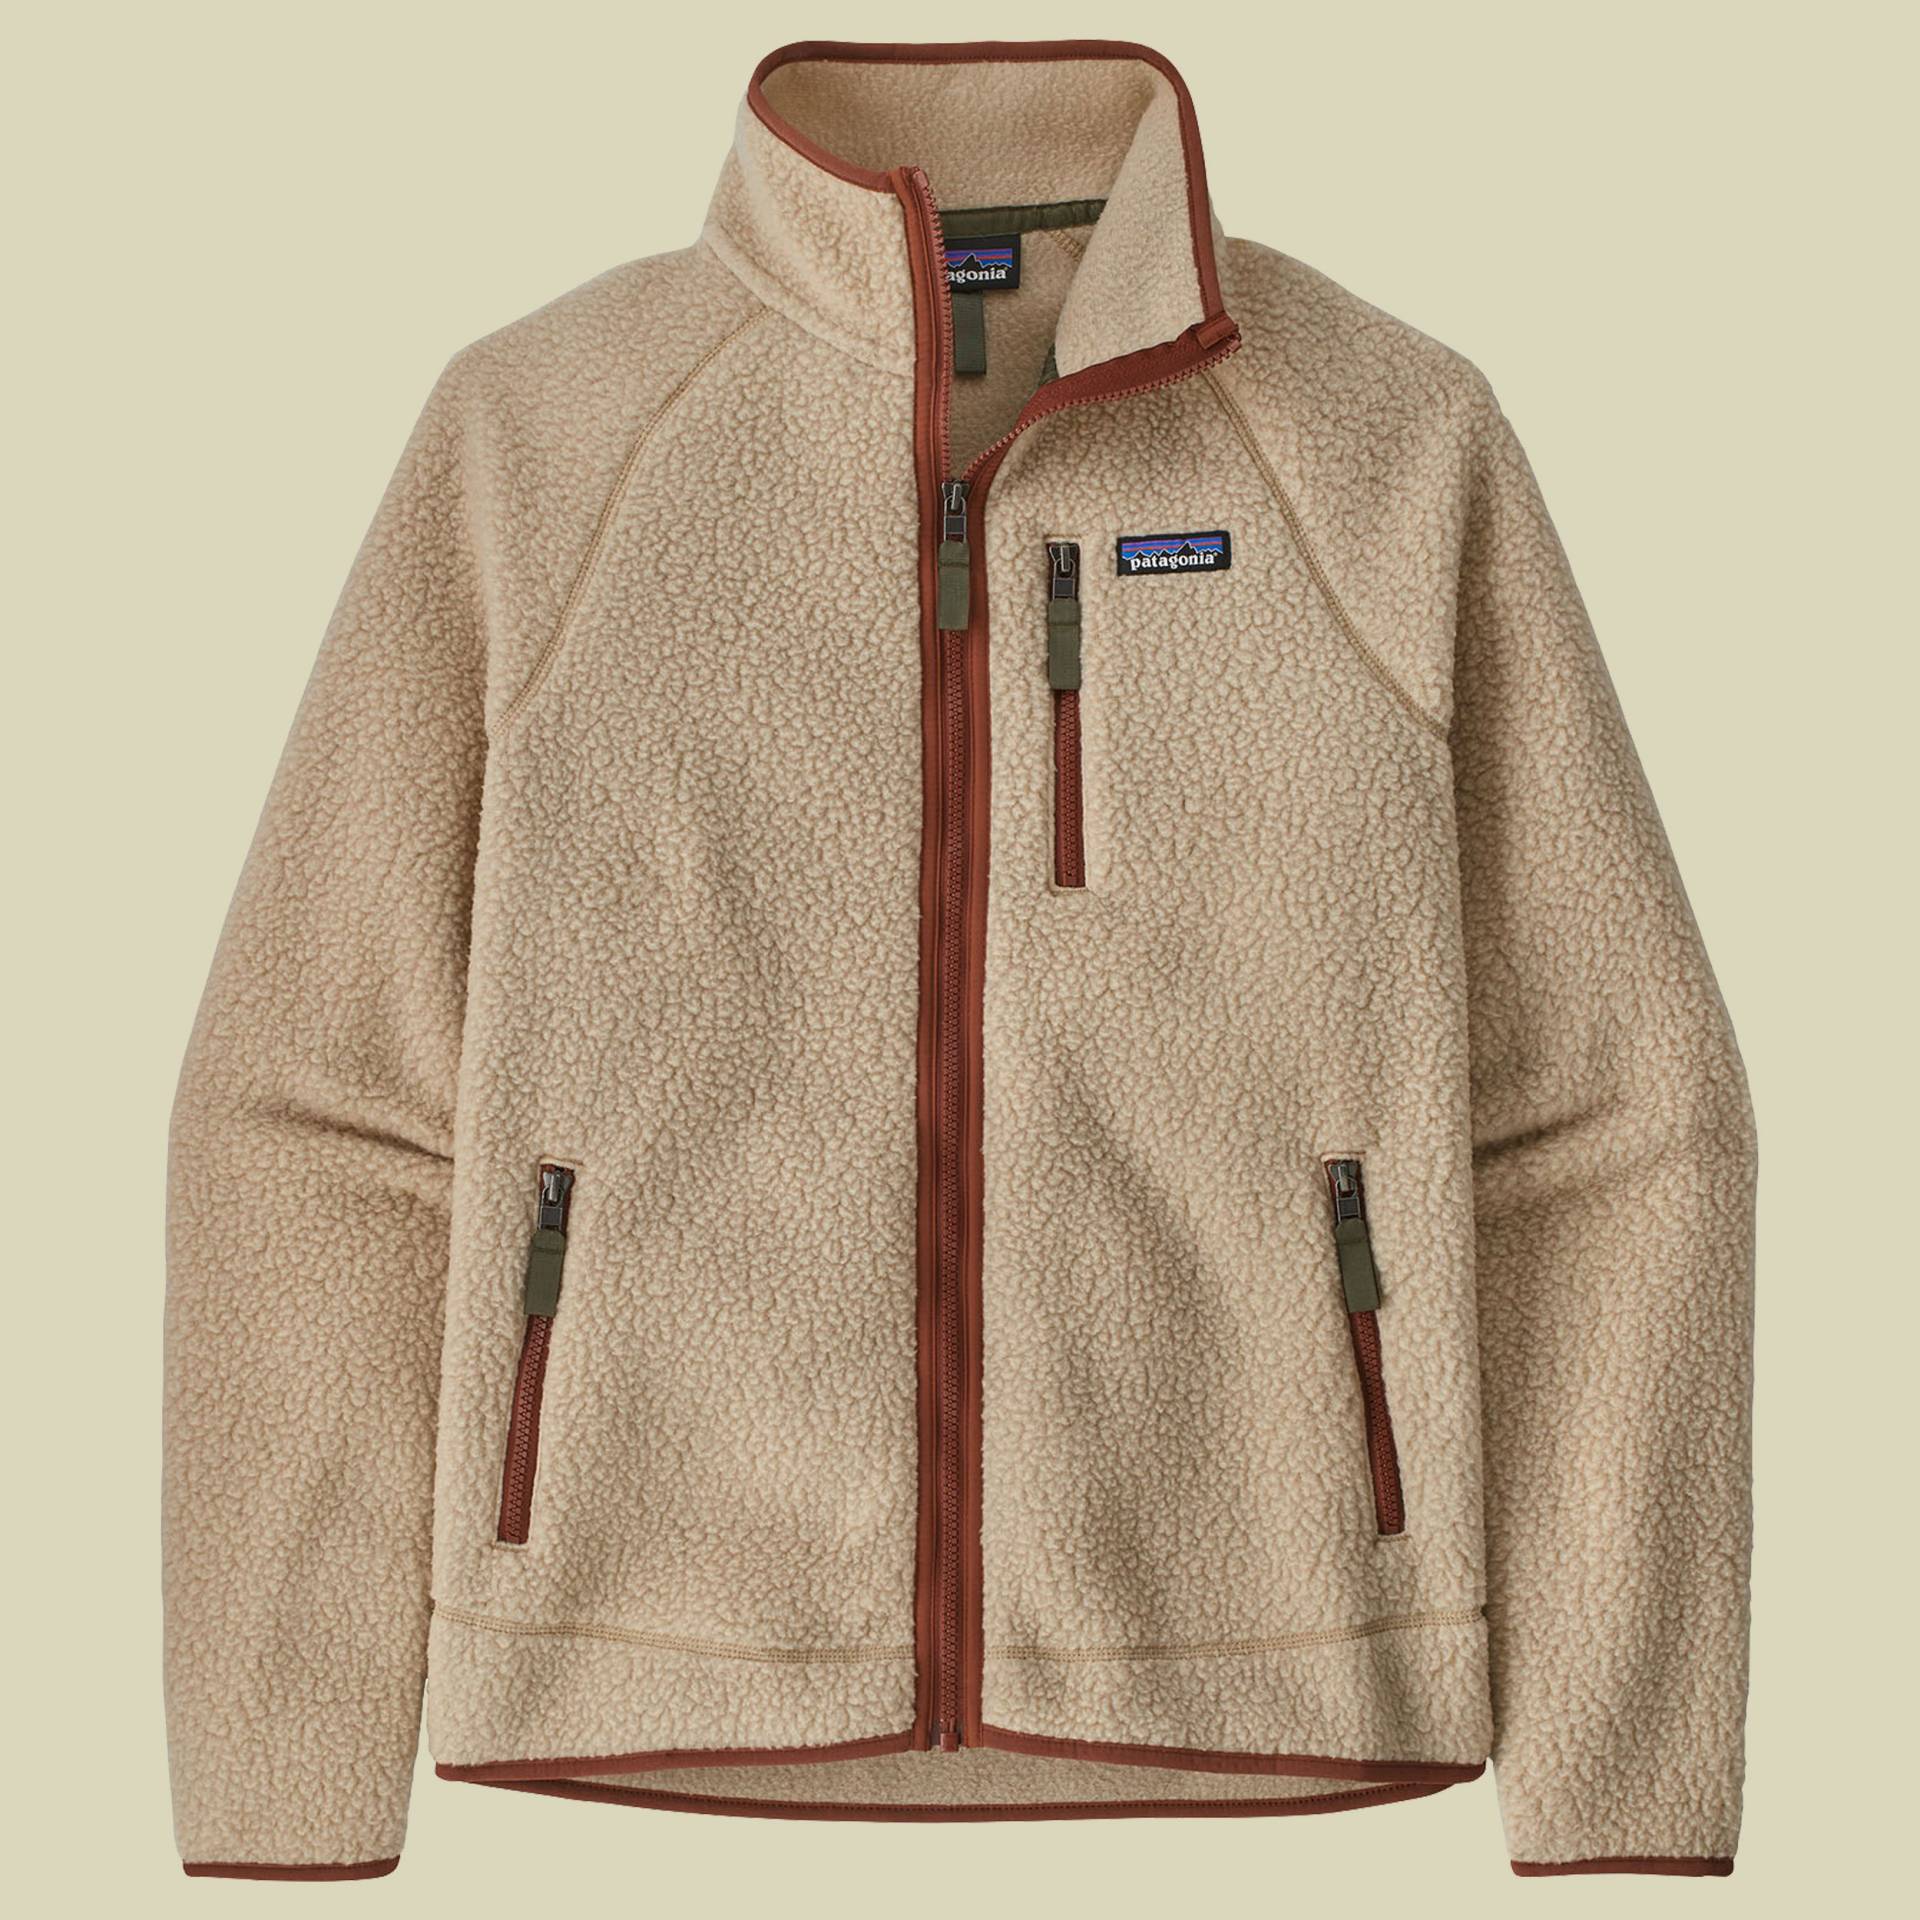 Retro Pile Jacket Men Größe S Farbe el cap khaki w/sisu brown von Patagonia